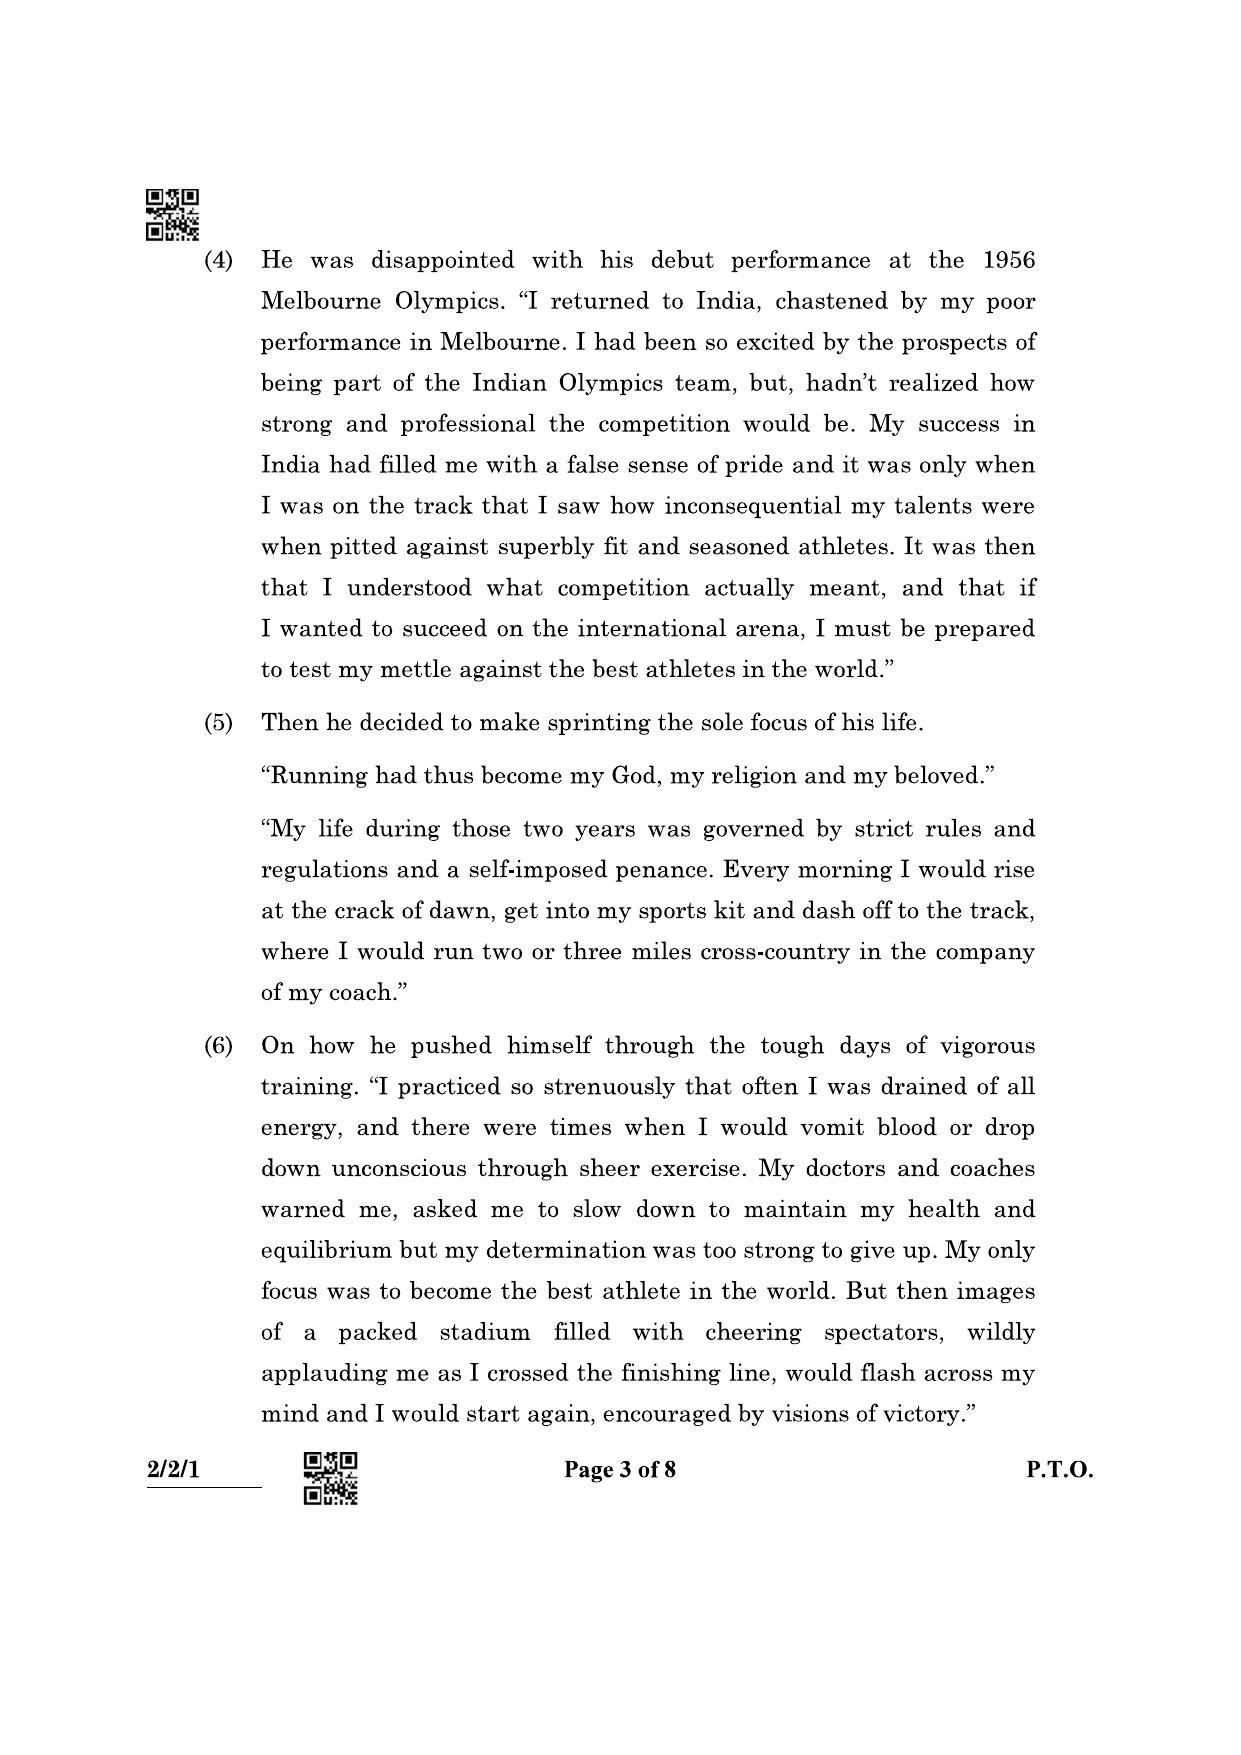 CBSE Class 10 2-2-1 (English L & L) 2022 Question Paper - Page 3